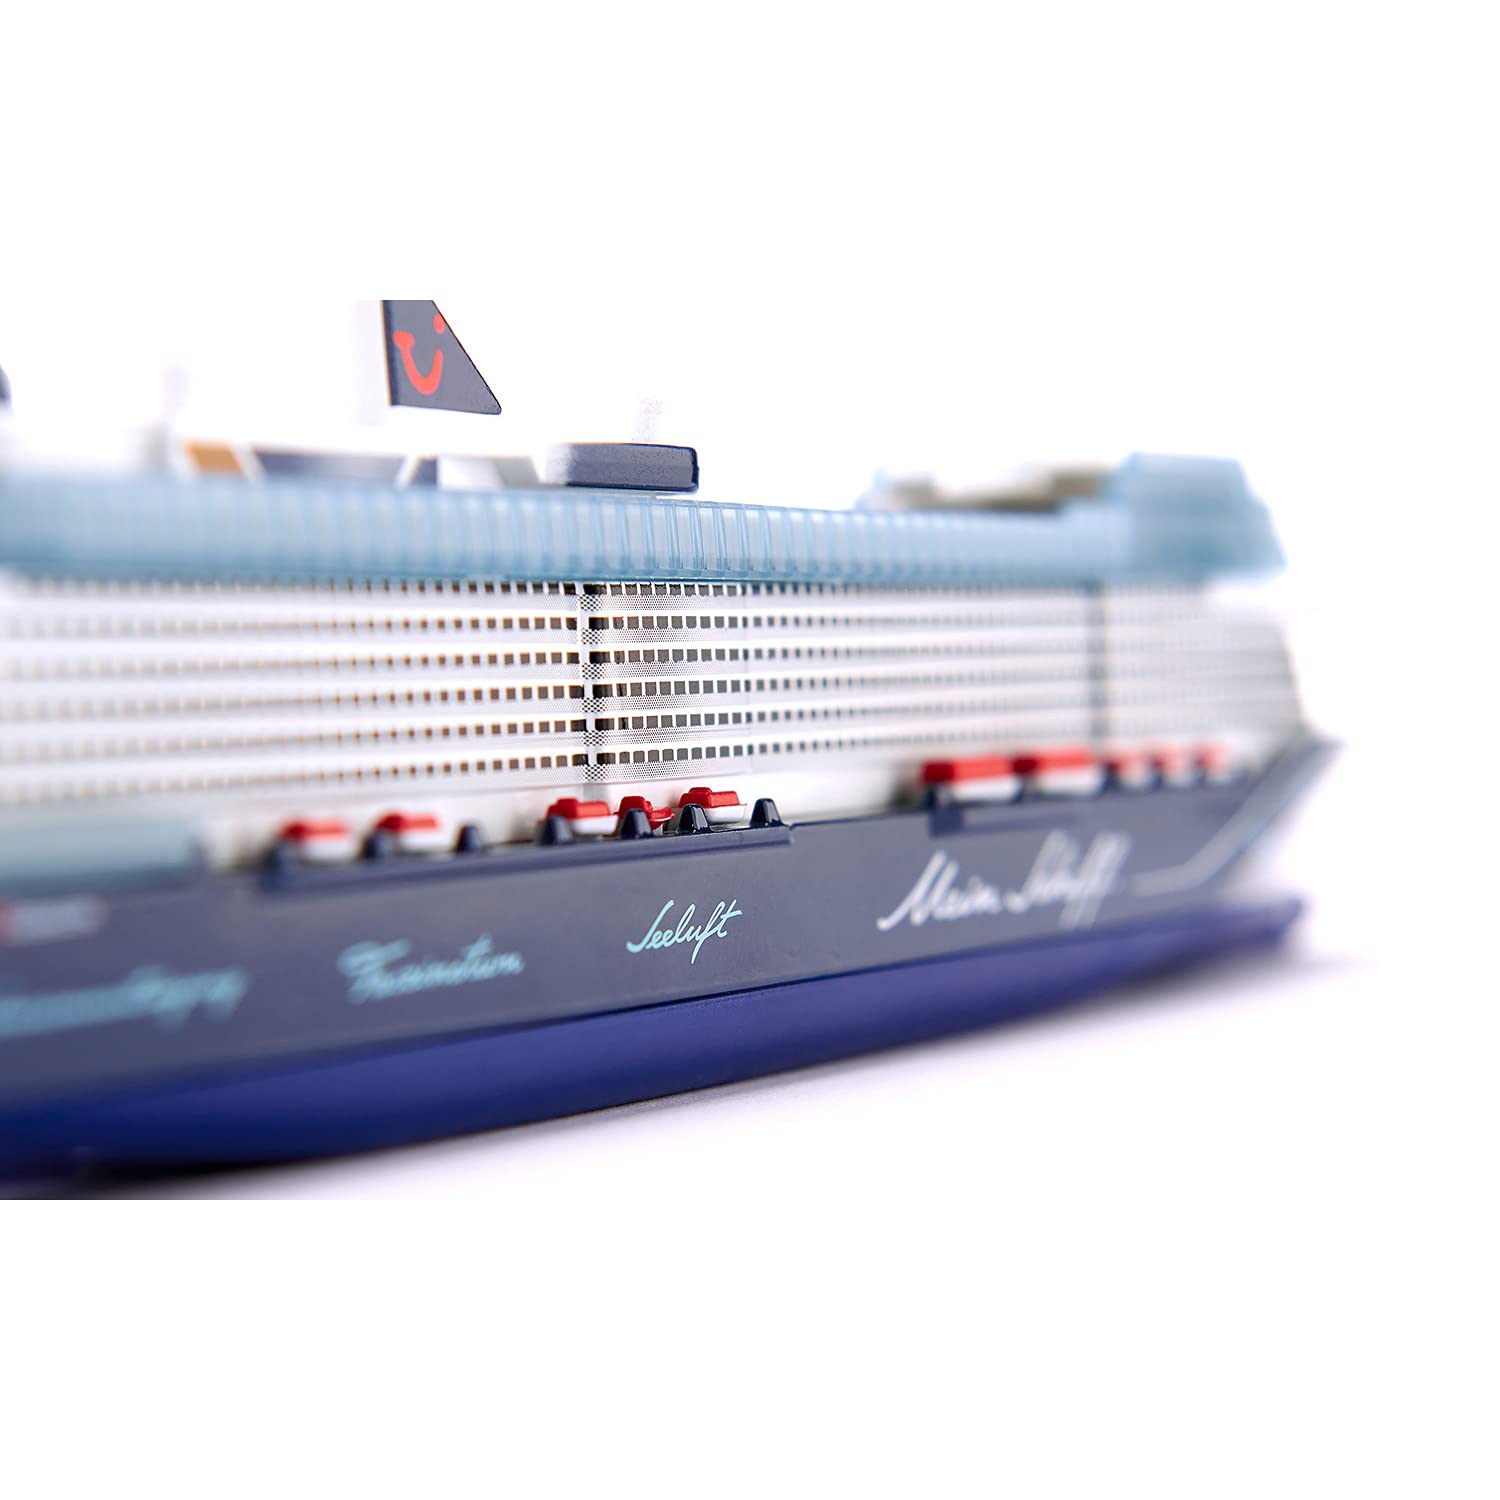 Siku 1730, Toy Cruise 1, 1:1400, Metal/Plastic, Blue/White, Not Floatable for Unisex Children